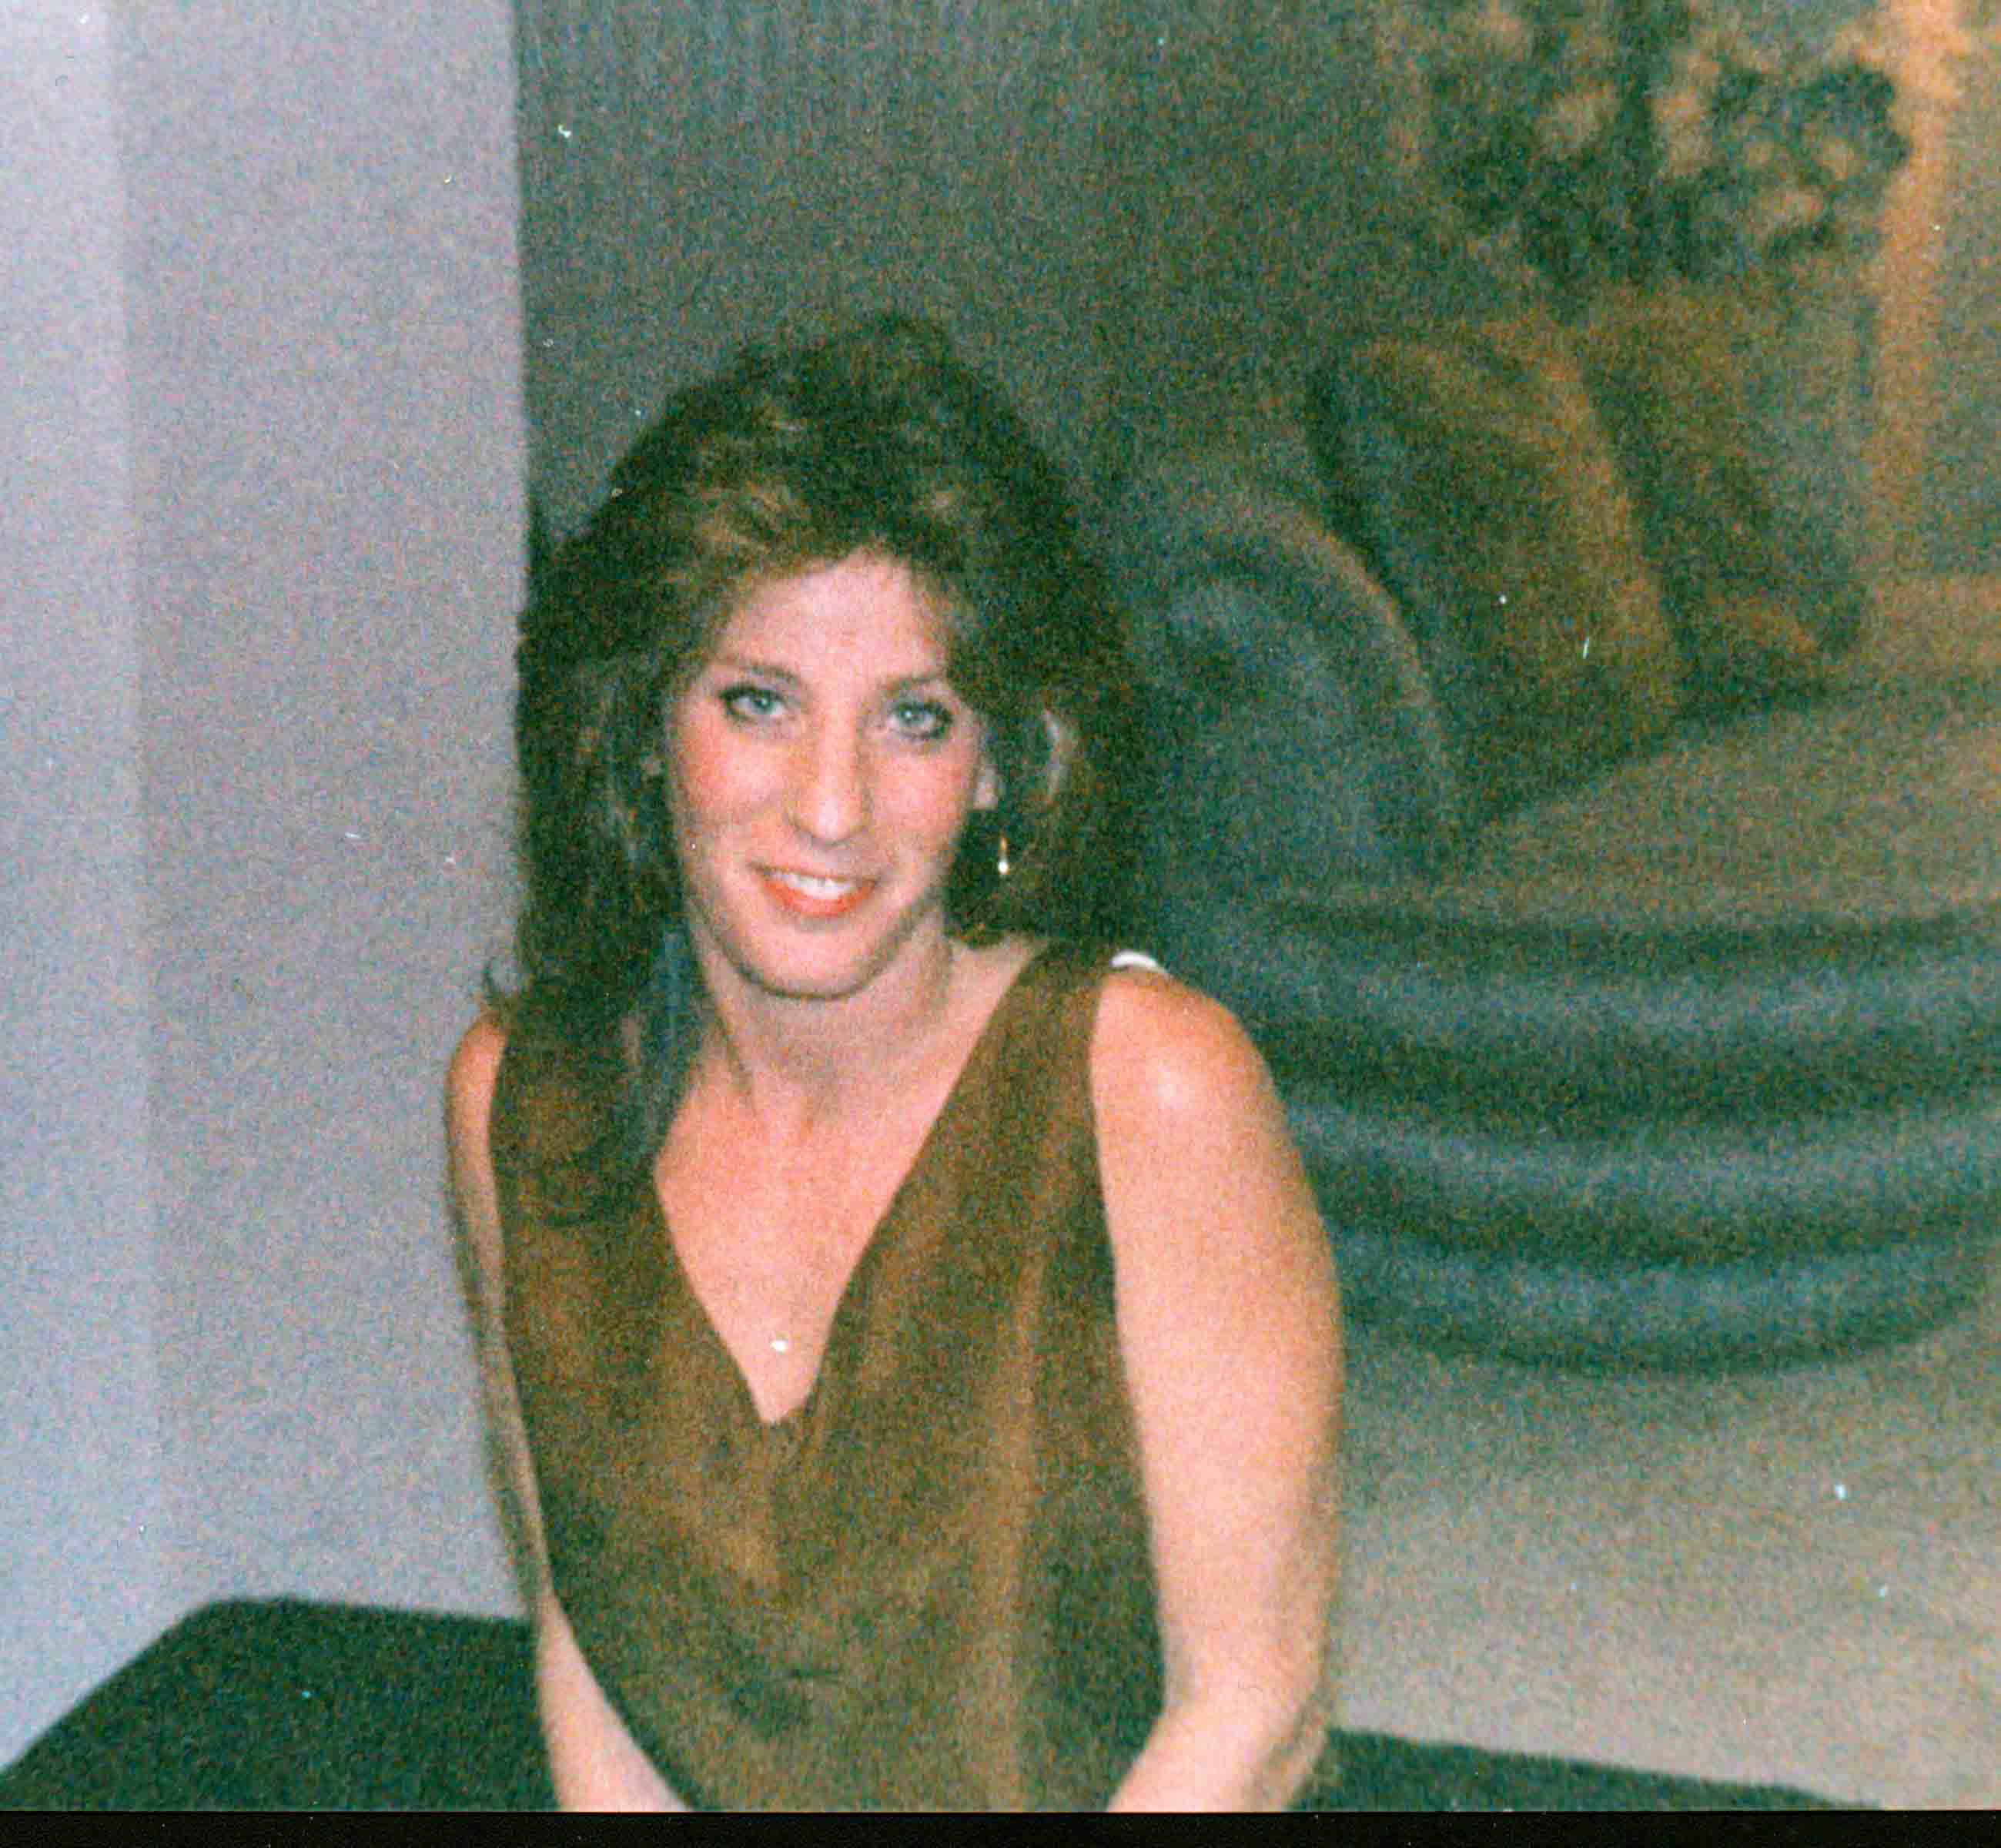 Michelle Lisa Adler 9/22/69 - 4/7/03 (A Roadruuner from the Class of 1981.)